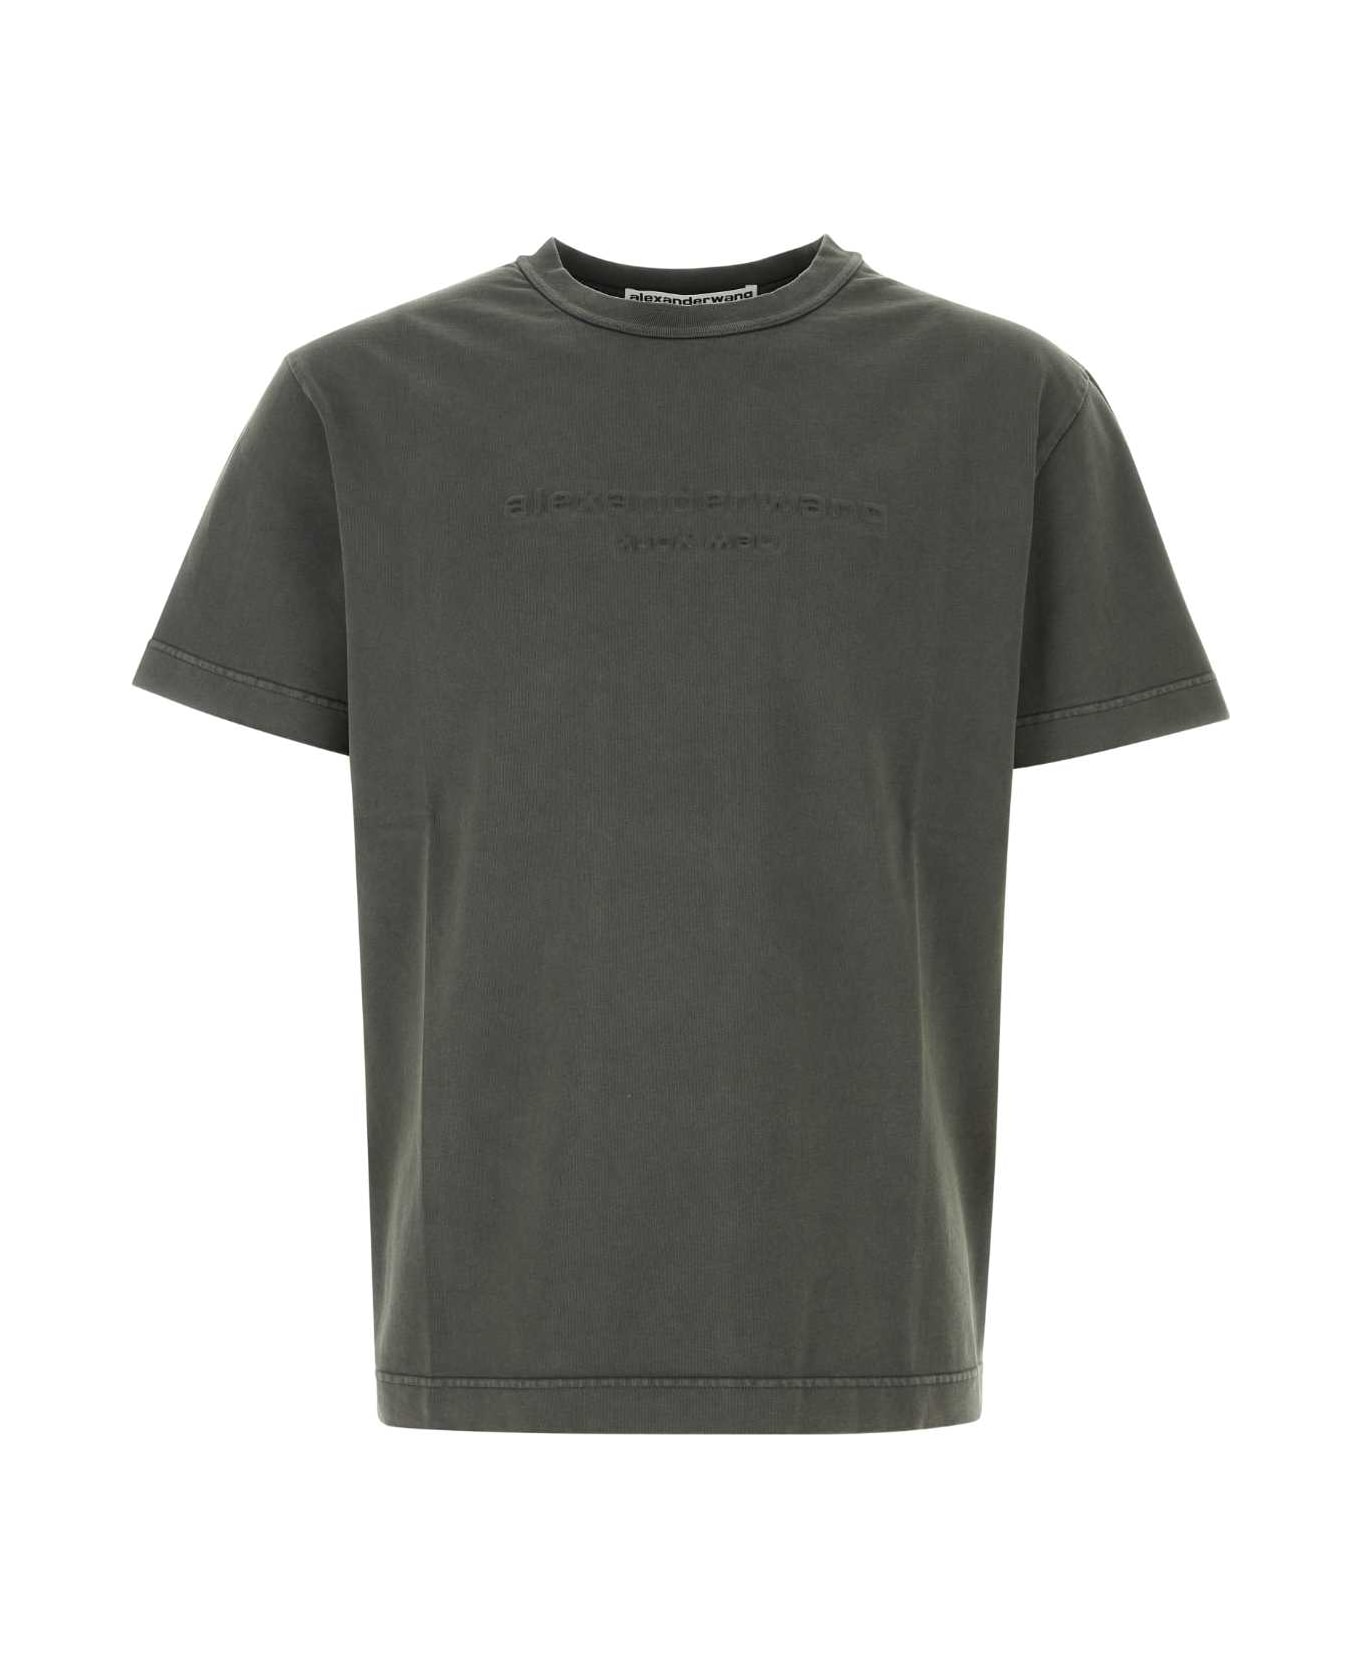 Alexander Wang Dark Grey Cotton T-shirt - SOFTOBSIDIAN